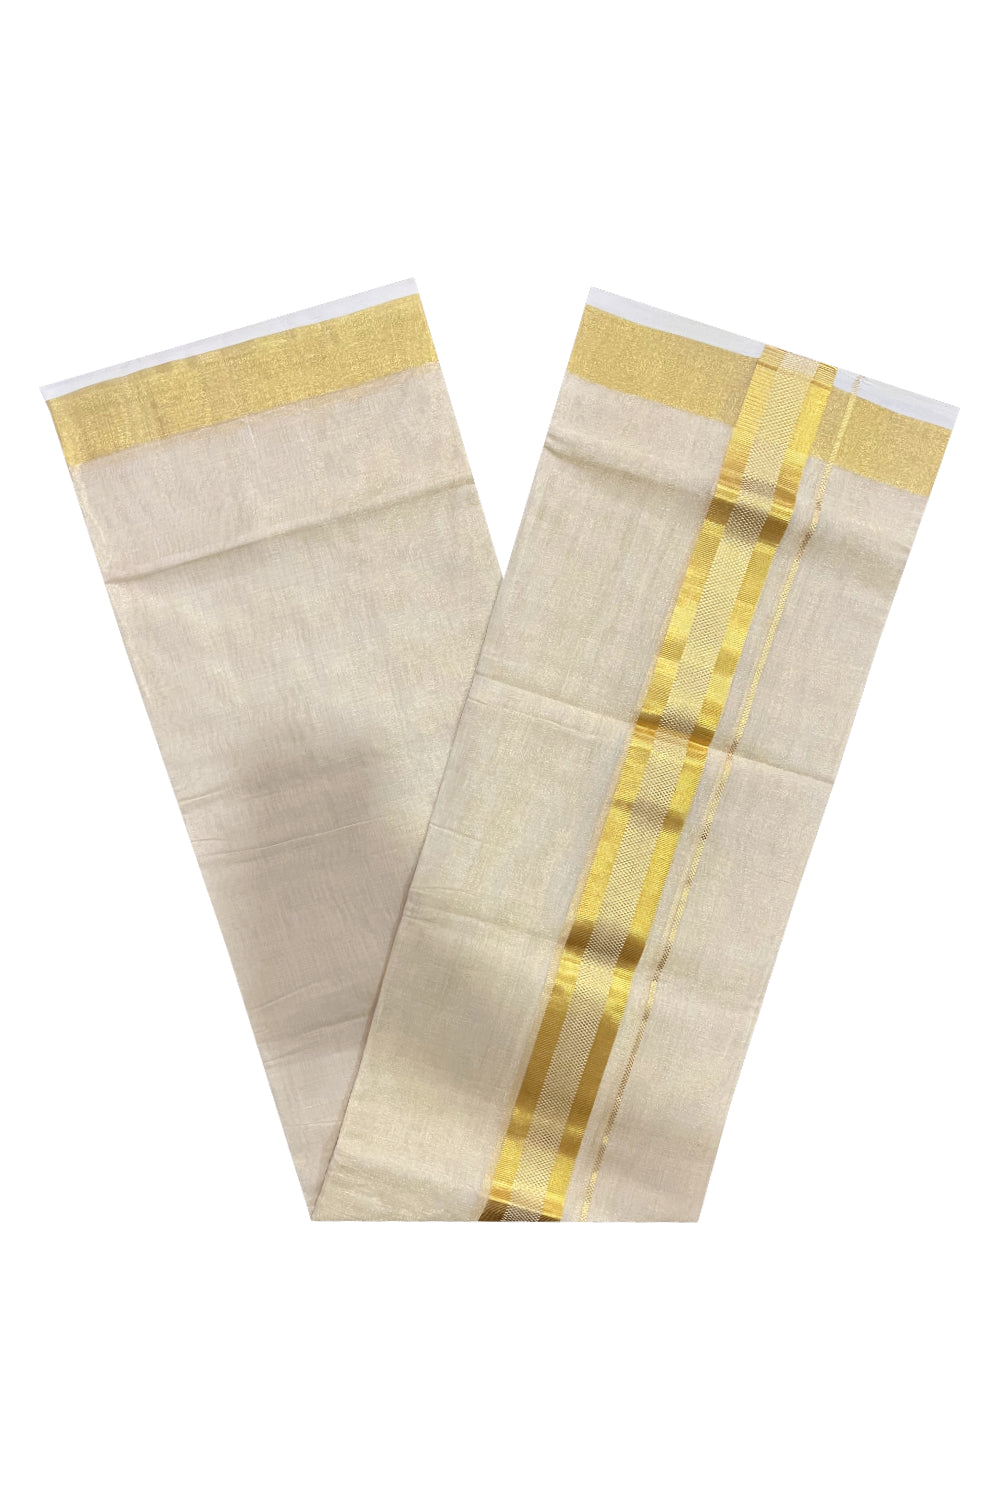 Southloom Premium Wedding Handloom Tissue Mundu with Kasavu Woven Border (South Indian Kerala Dhoti)